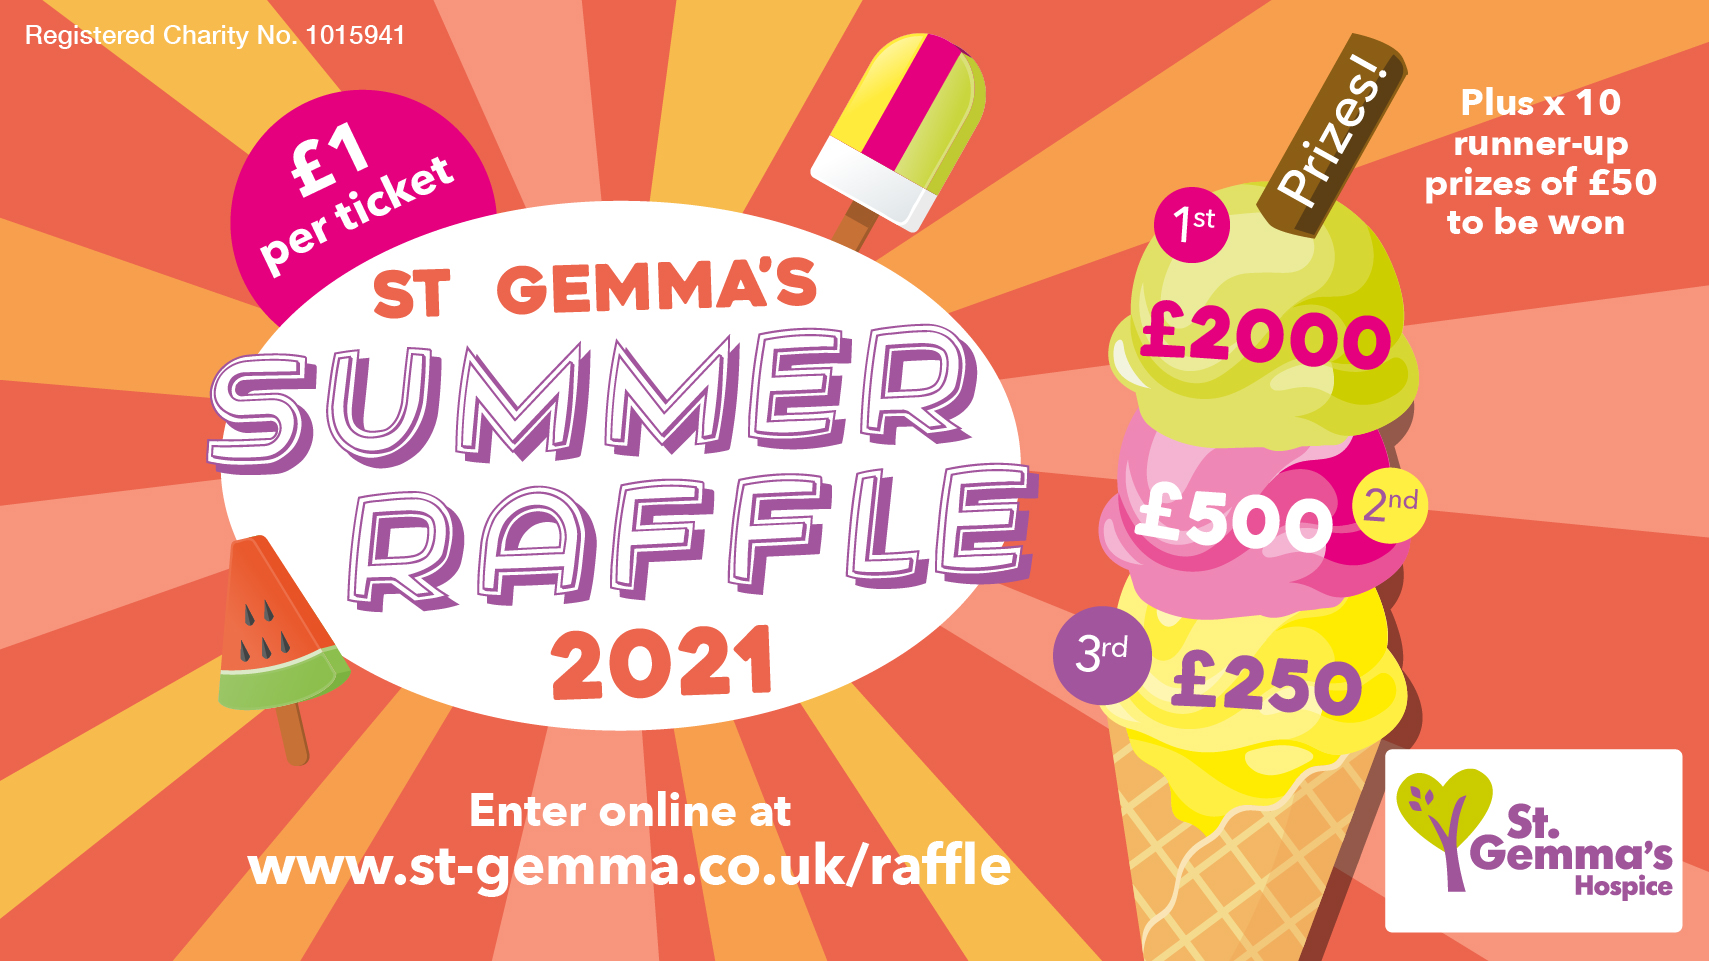 Graphic with wording "St Gemma's Summer Raffle 2021"